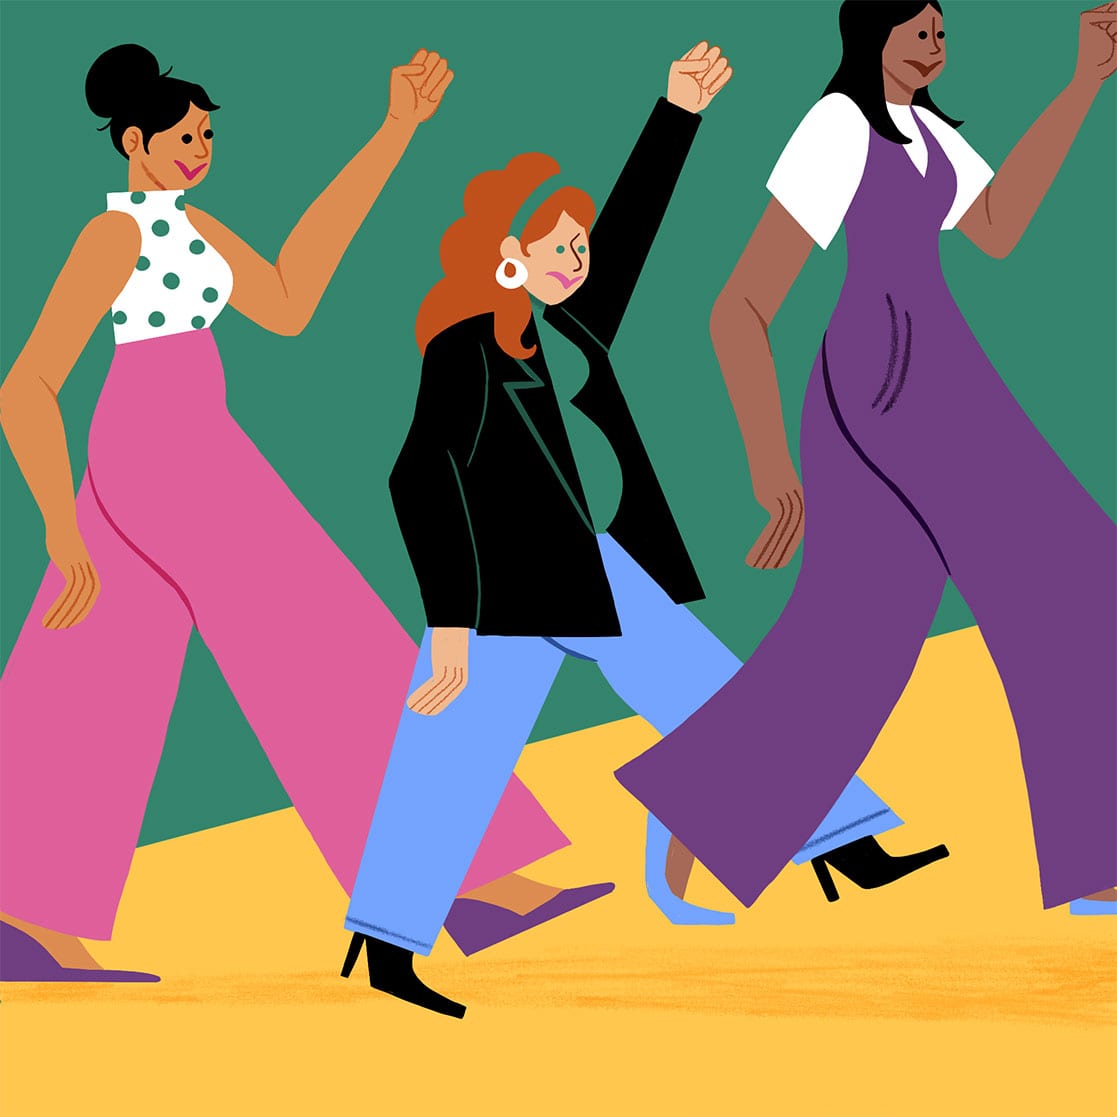 Illustration of three women marching